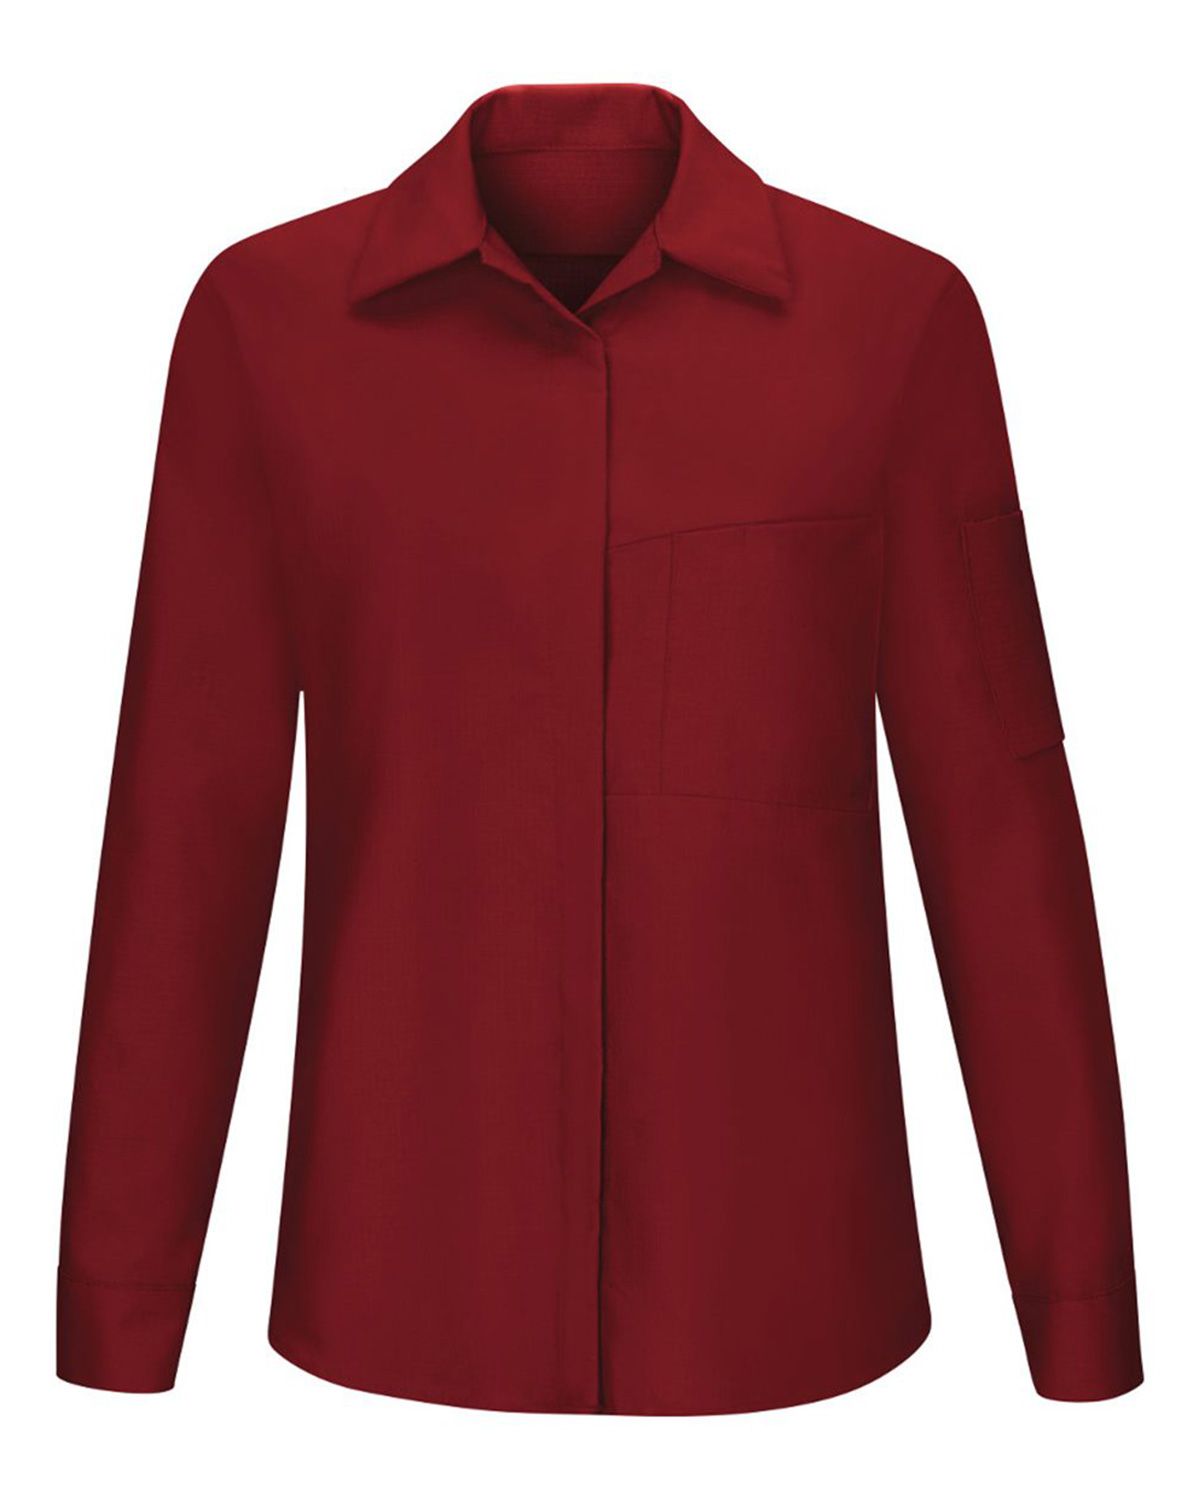 embroidered red kap shirts bulk